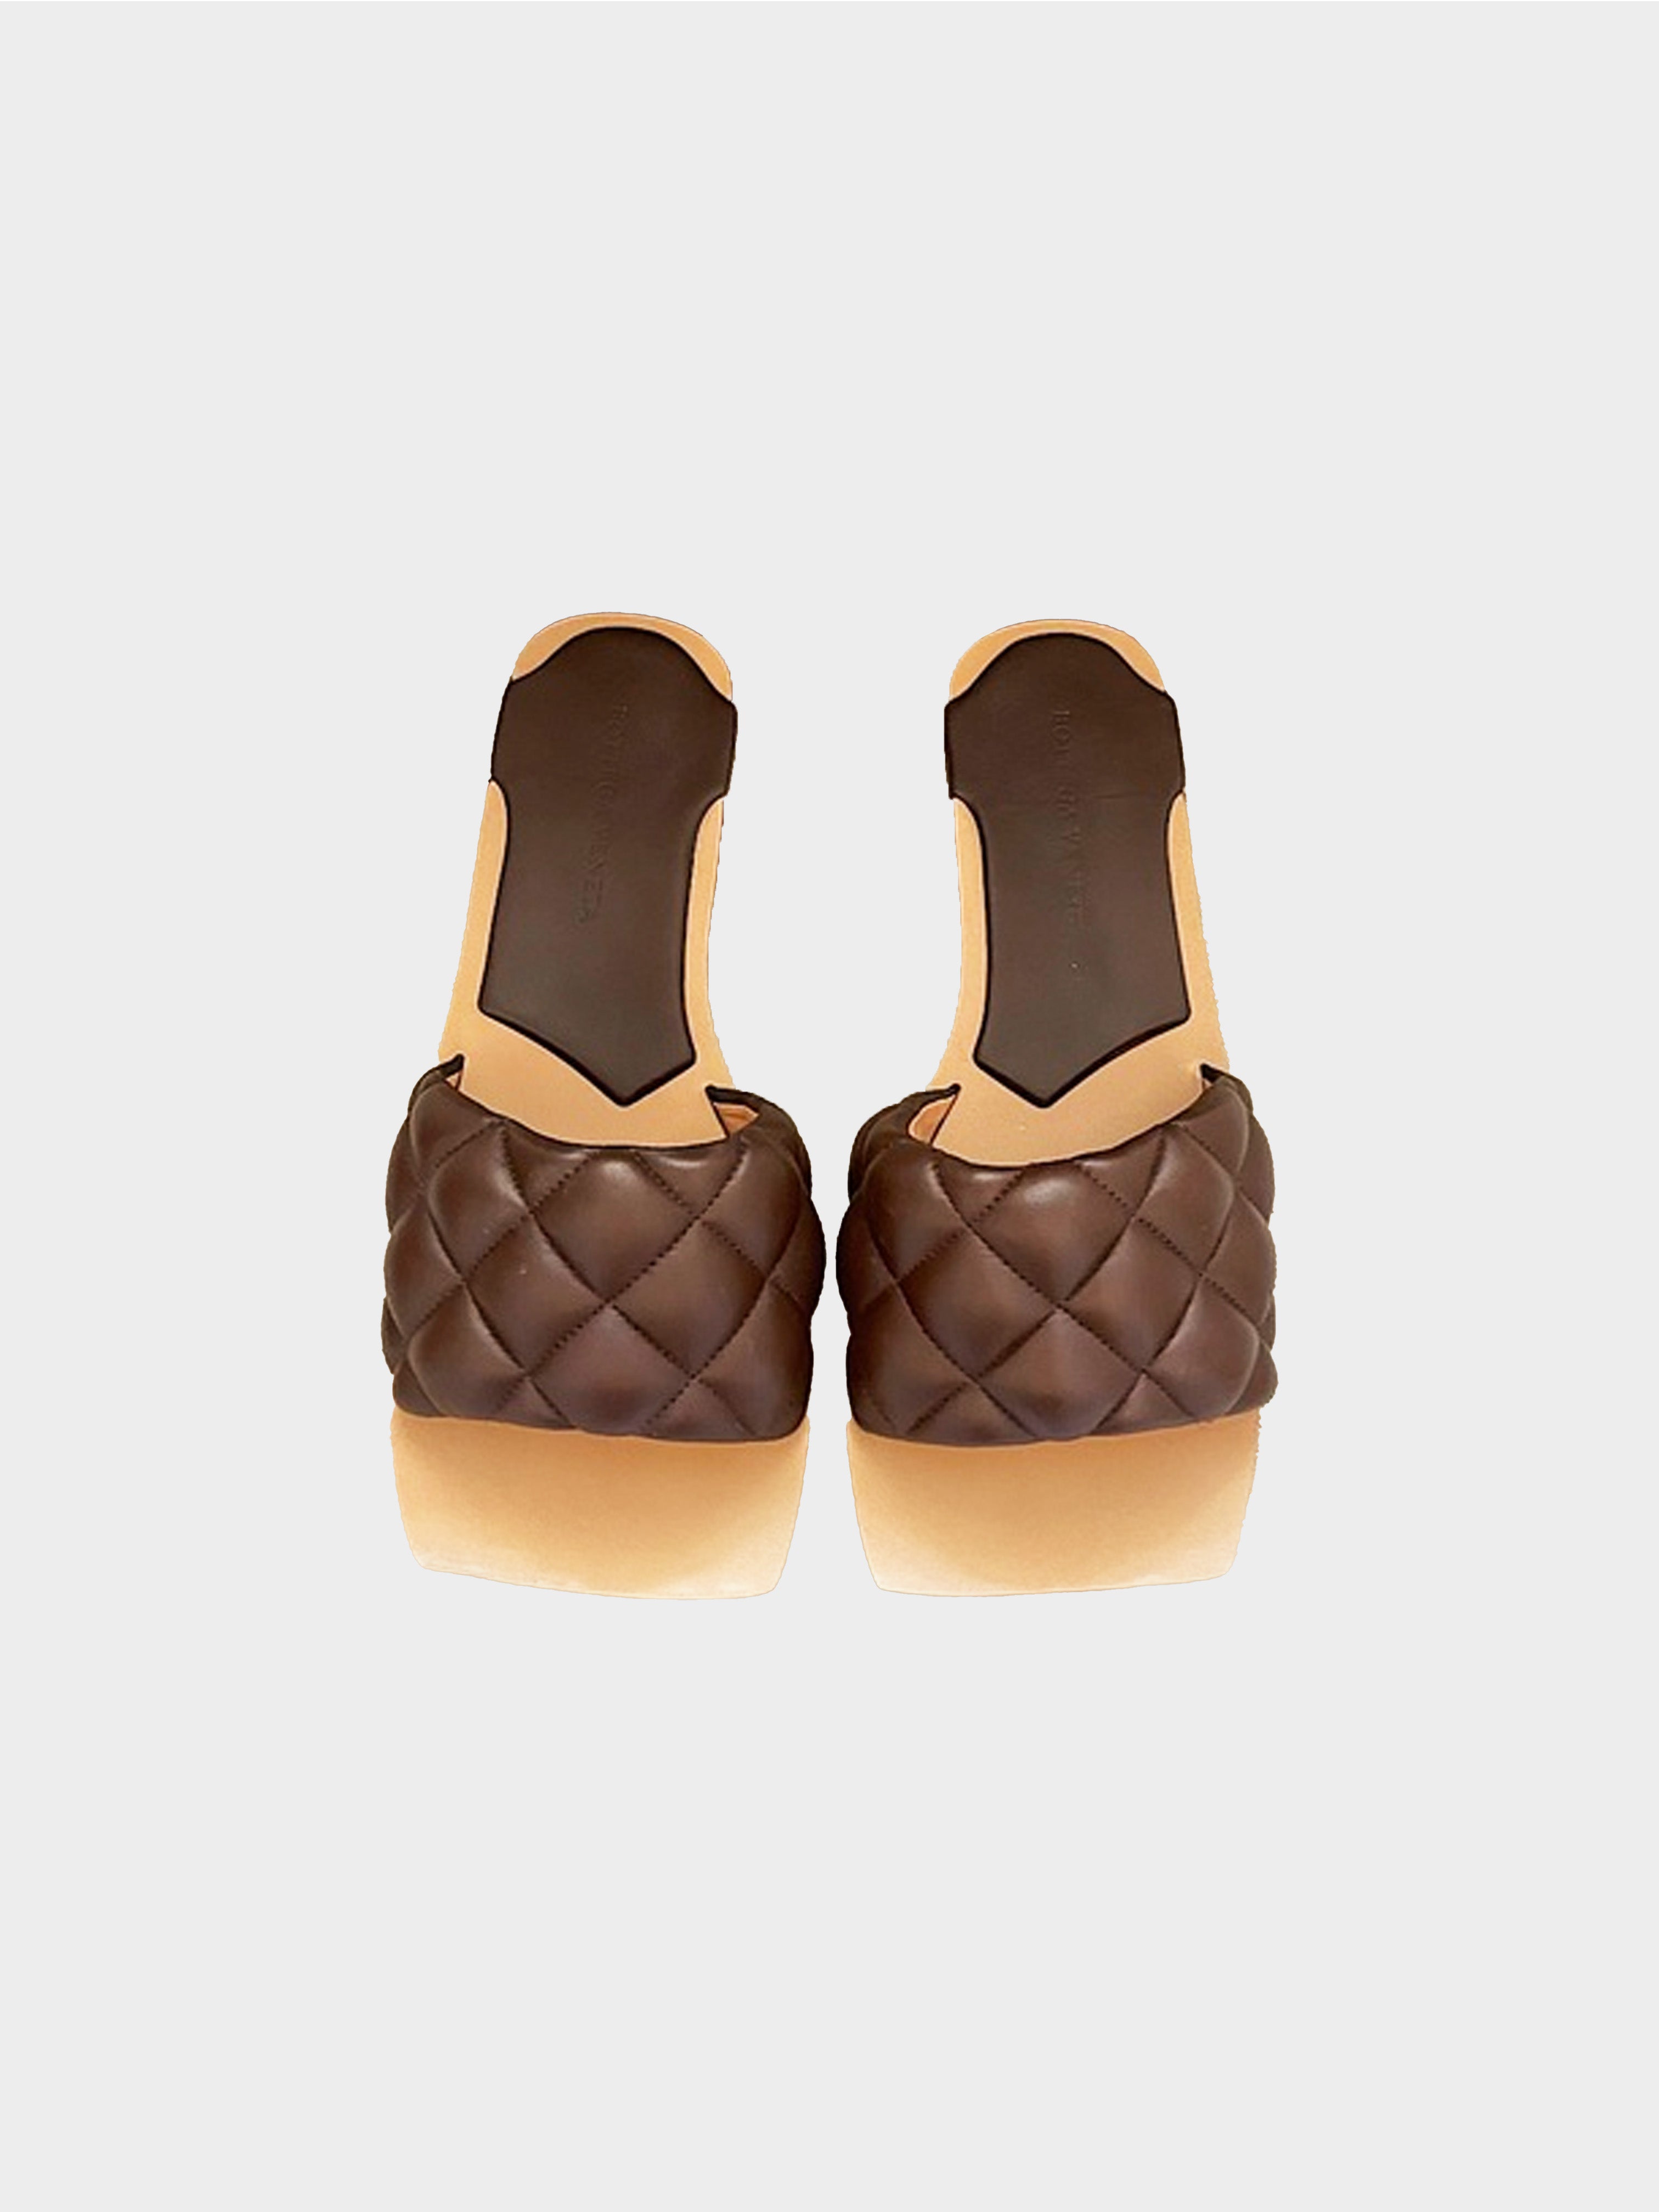 Bottega Veneta SS 2020 Brown Woven Sandals